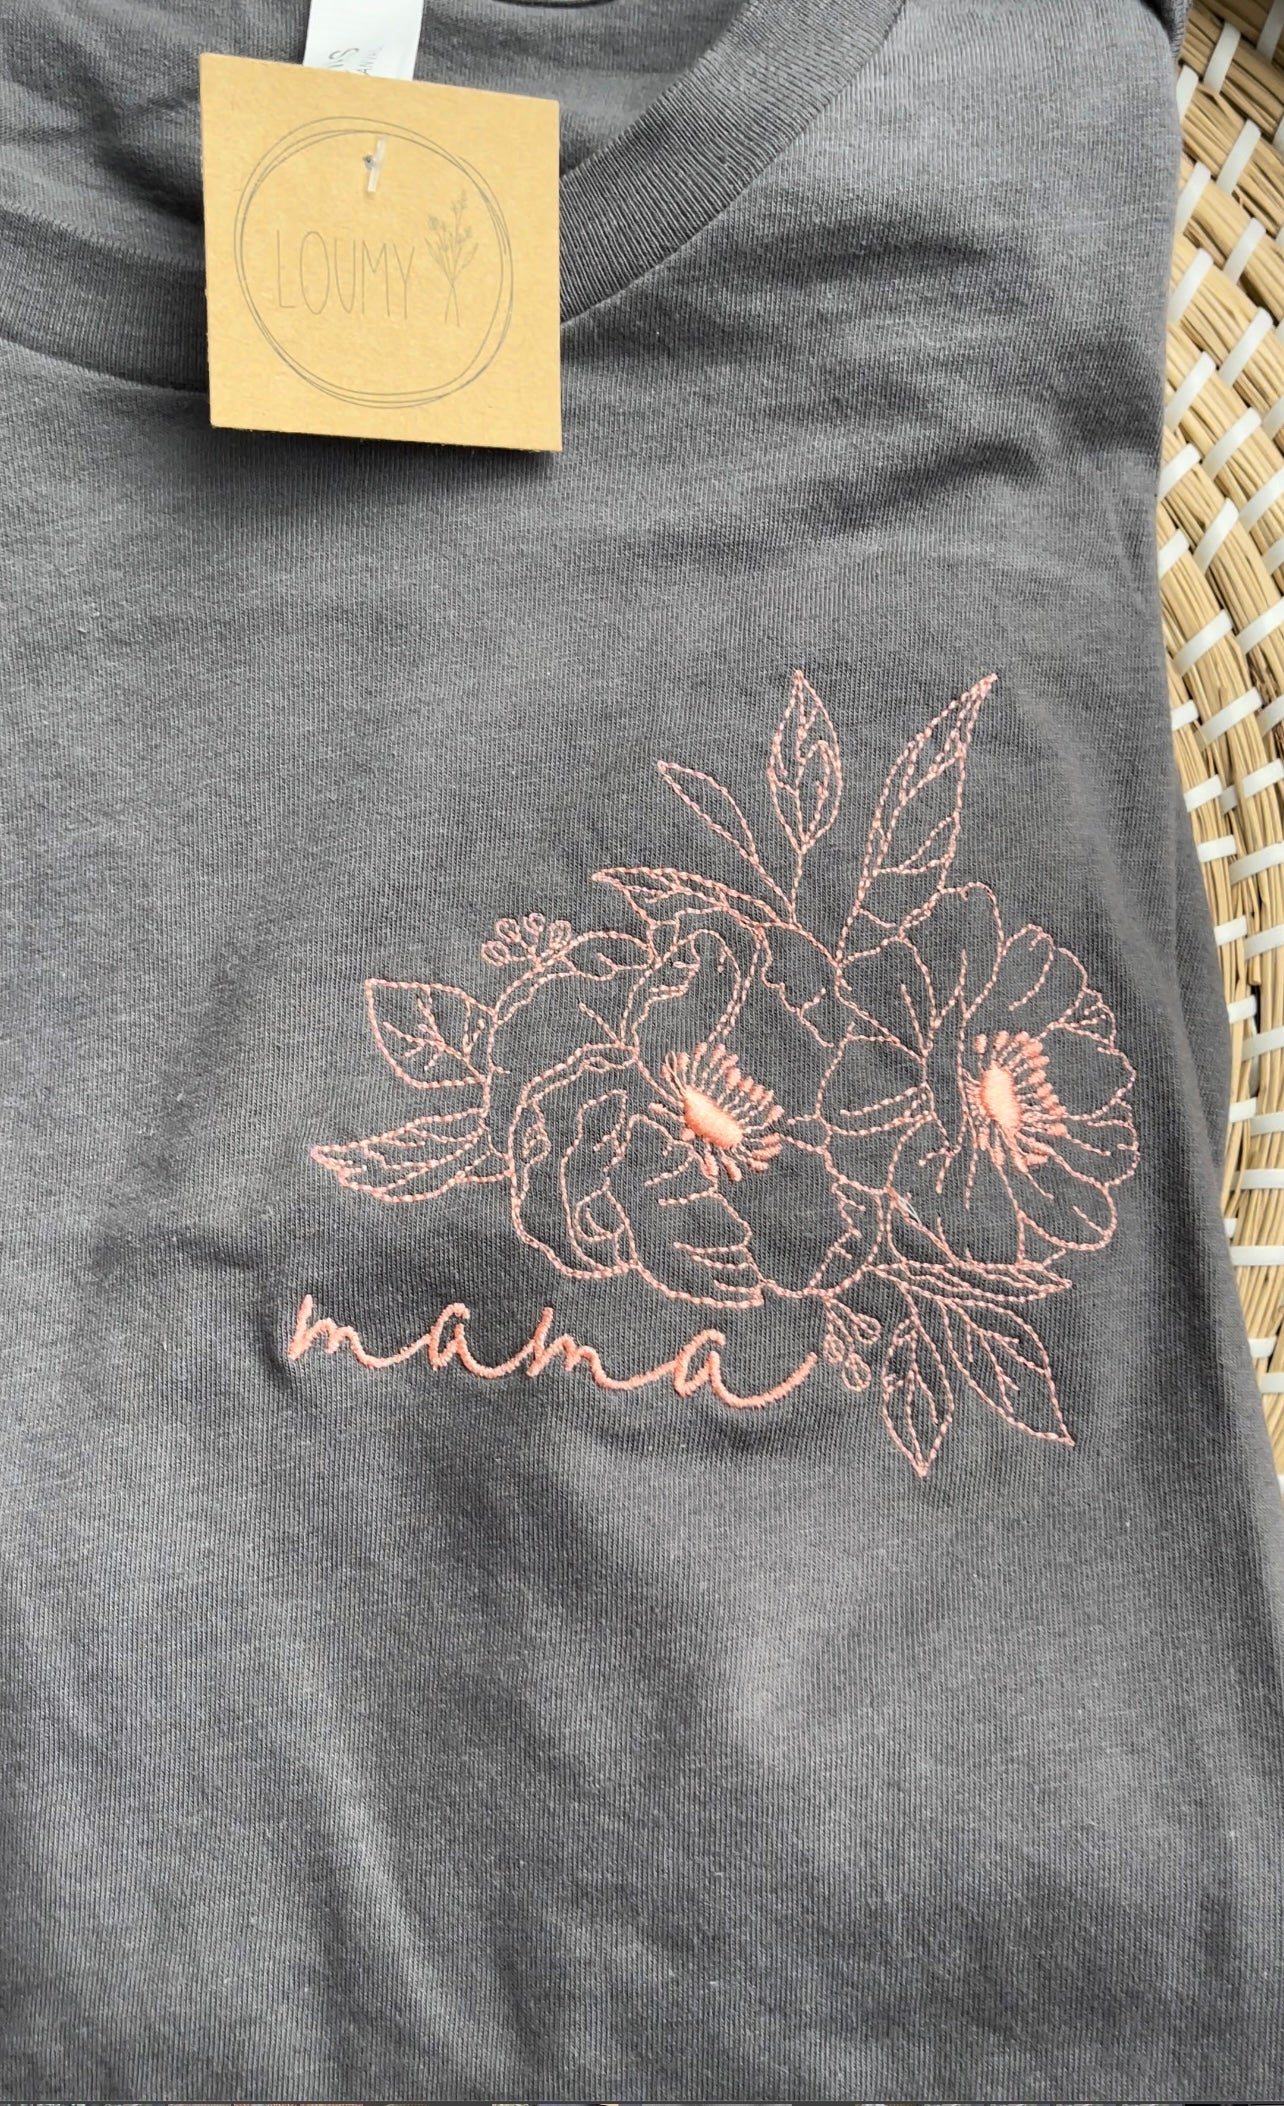 Mama fleur - t-shirt